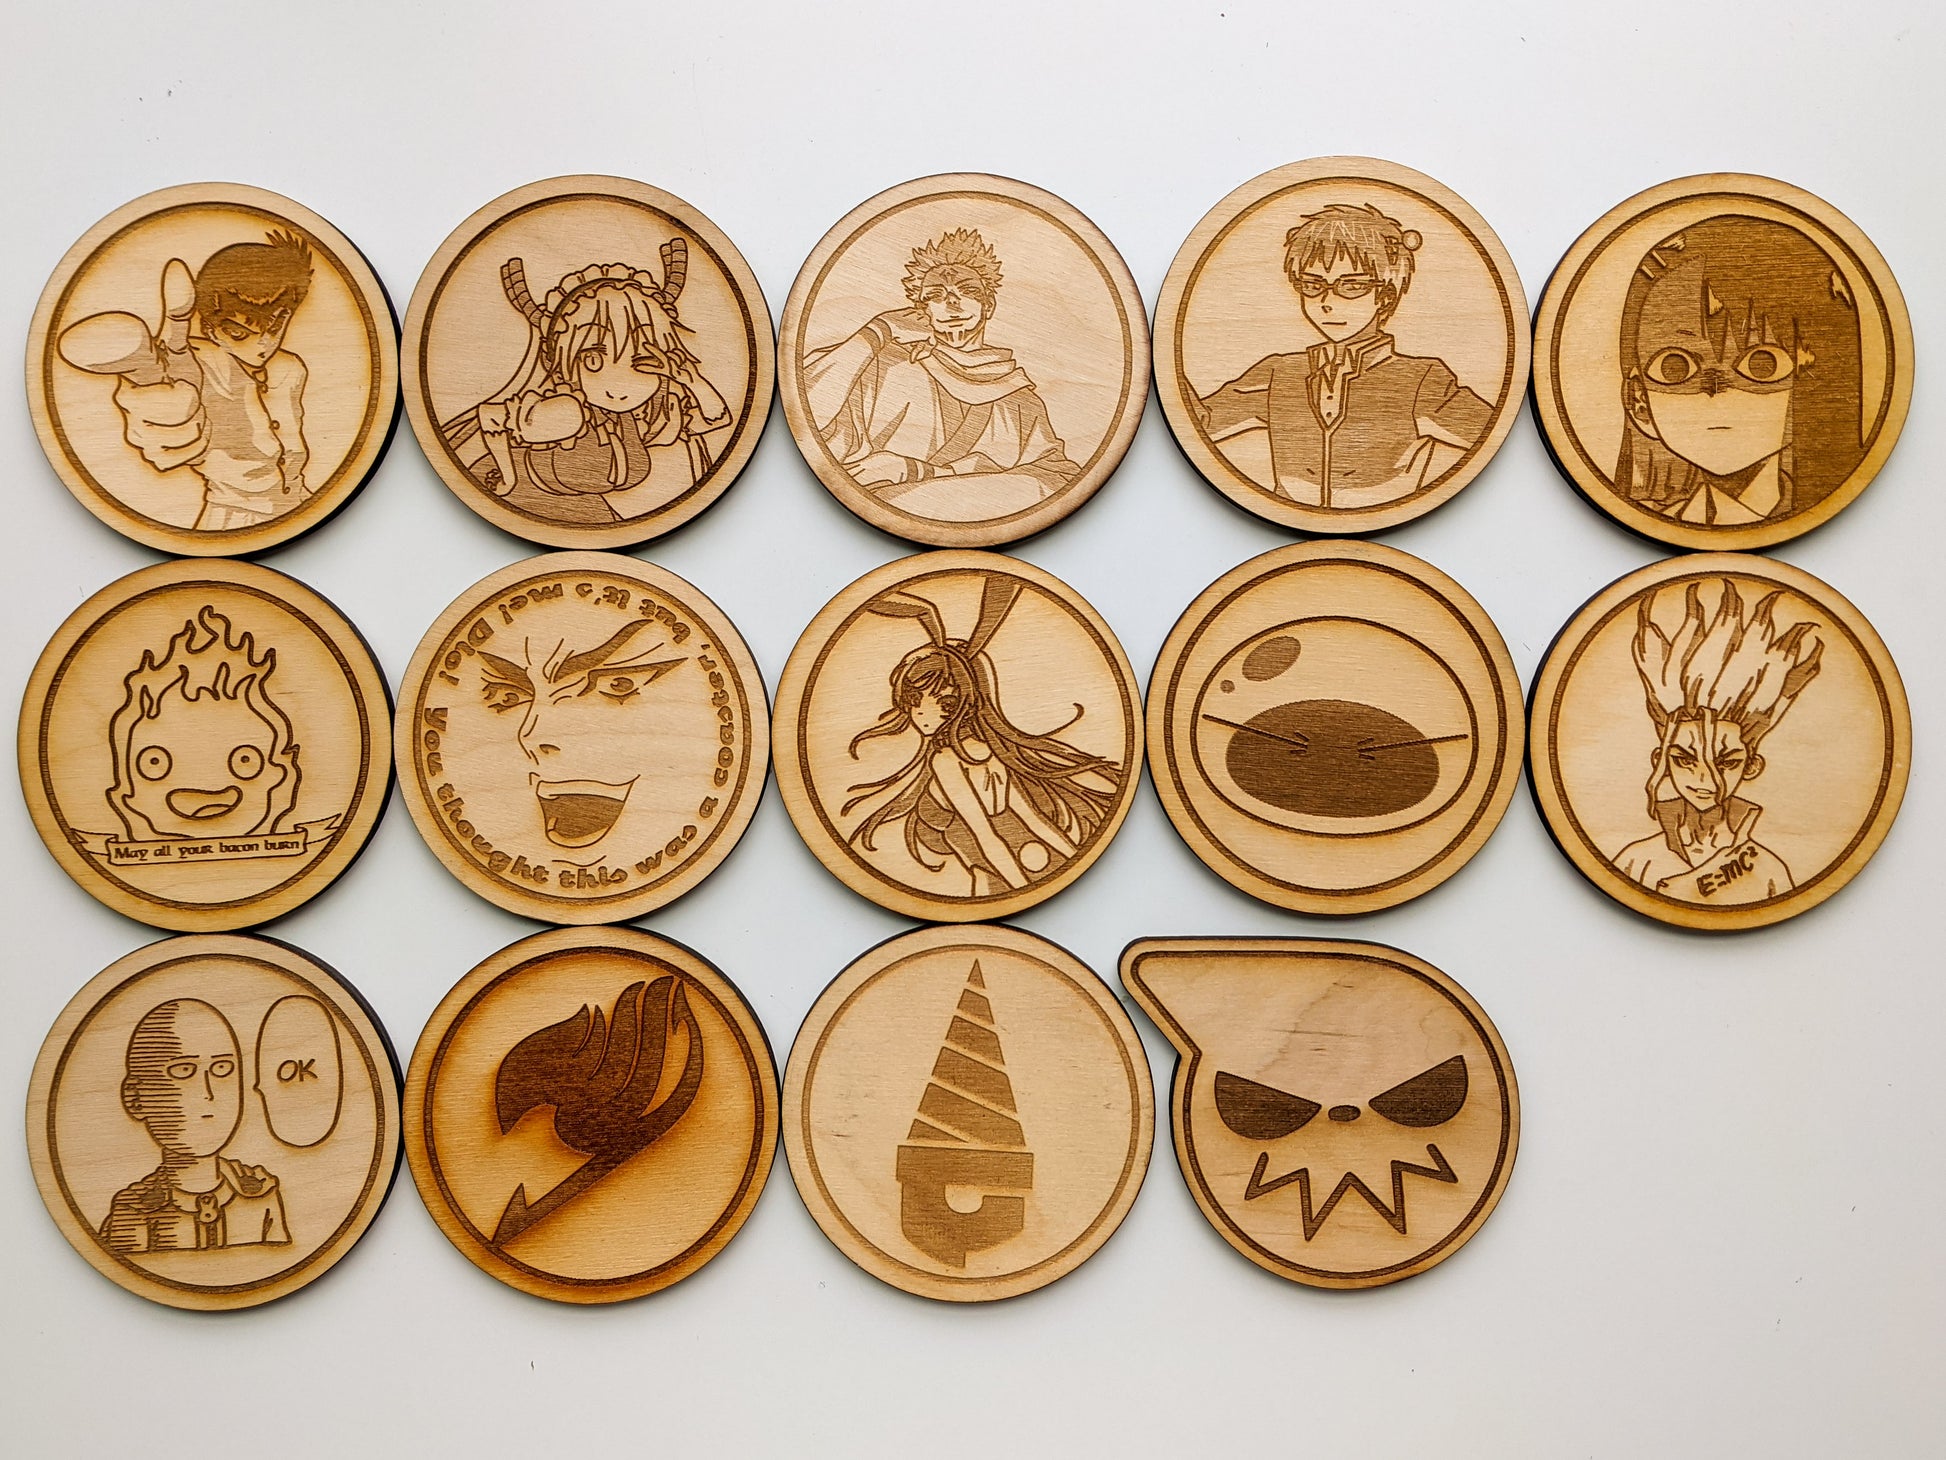 Charlotte Katakuri  Coasters (Set of 4) for Sale by Genjitsu-Art